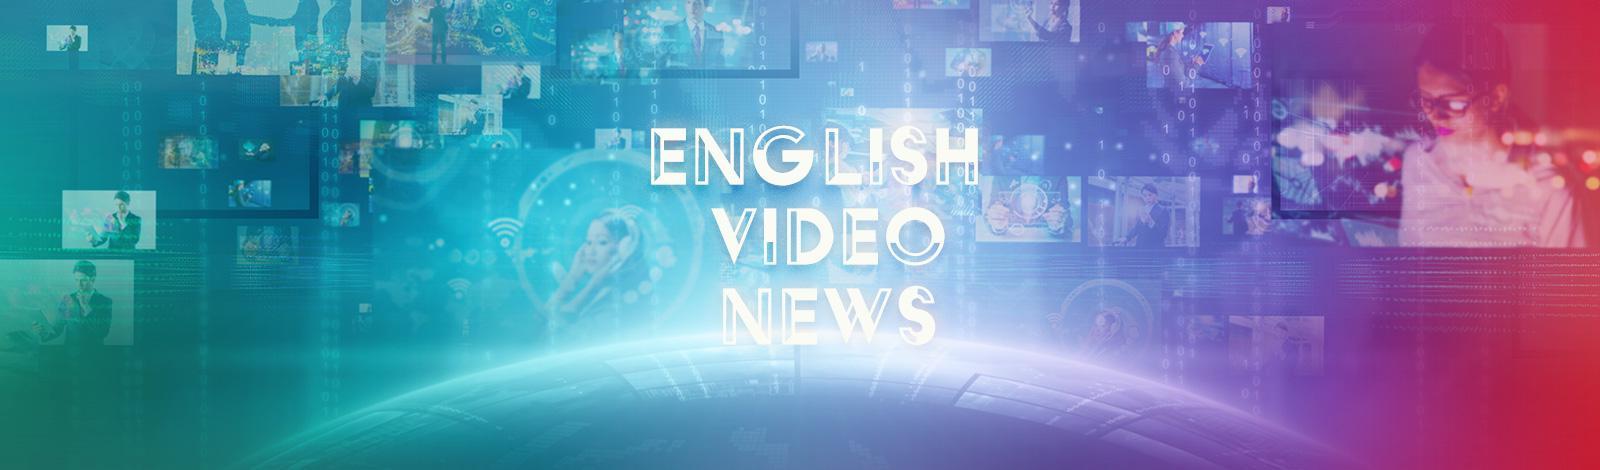 English Video News